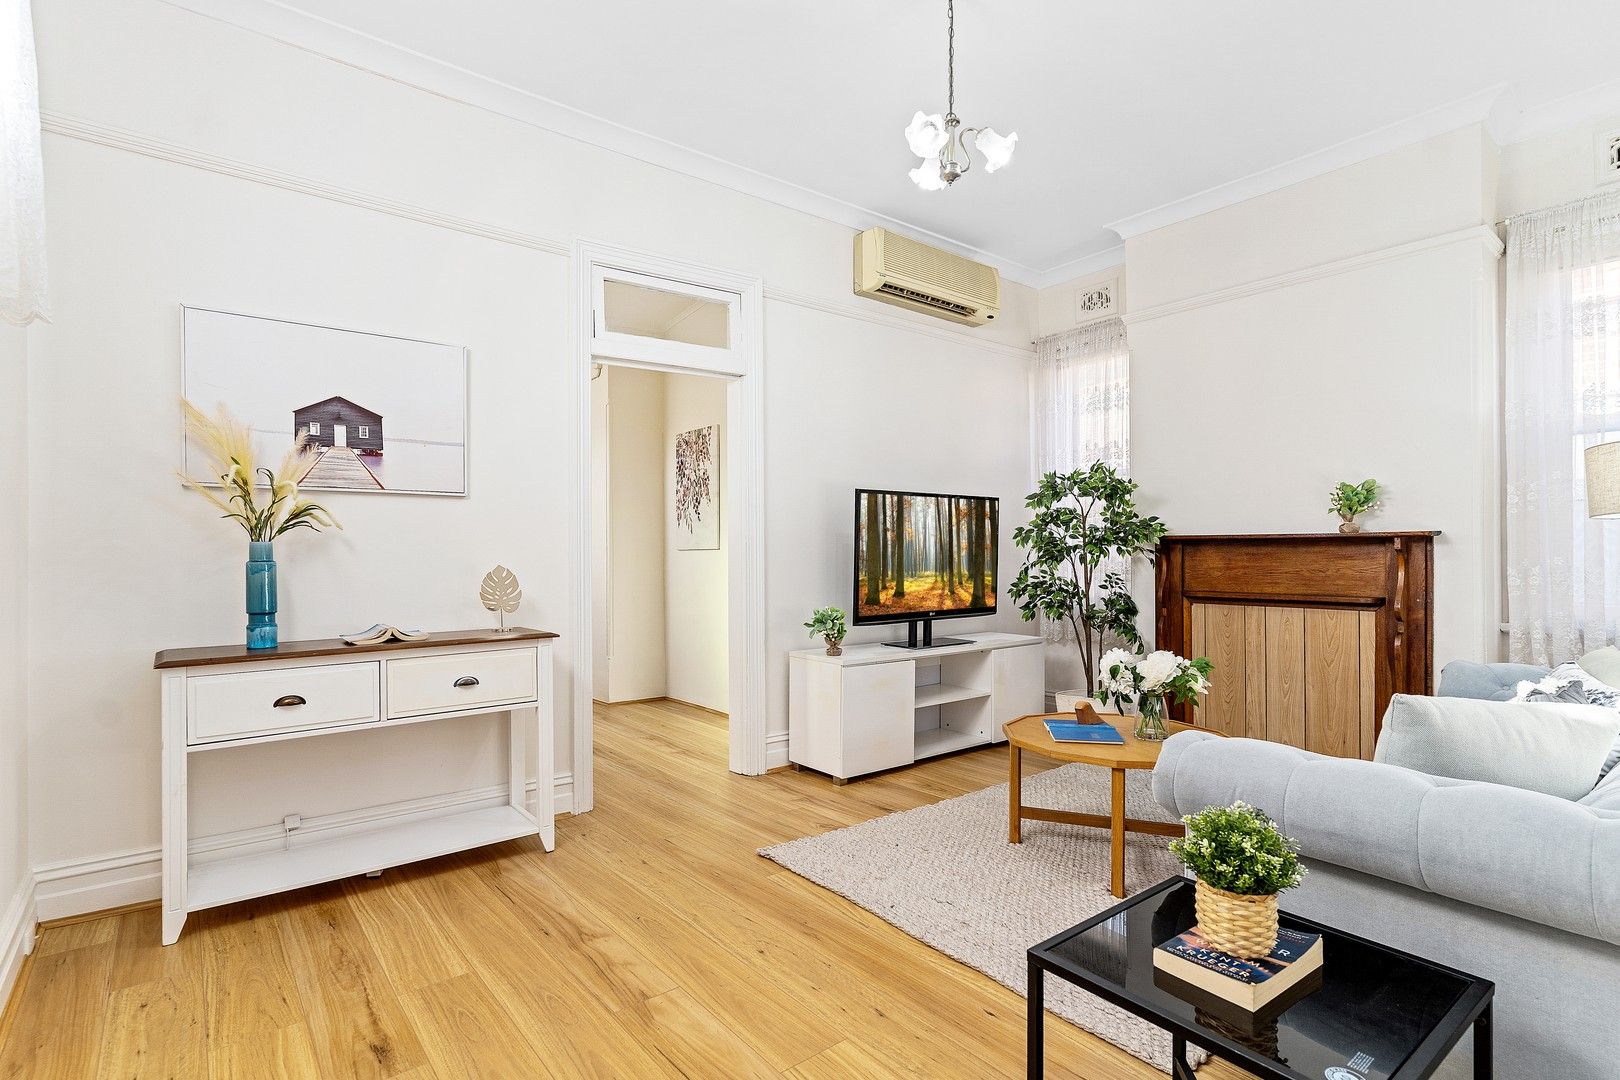 2 bedrooms House in 13 Heighway Avenue ASHFIELD NSW, 2131